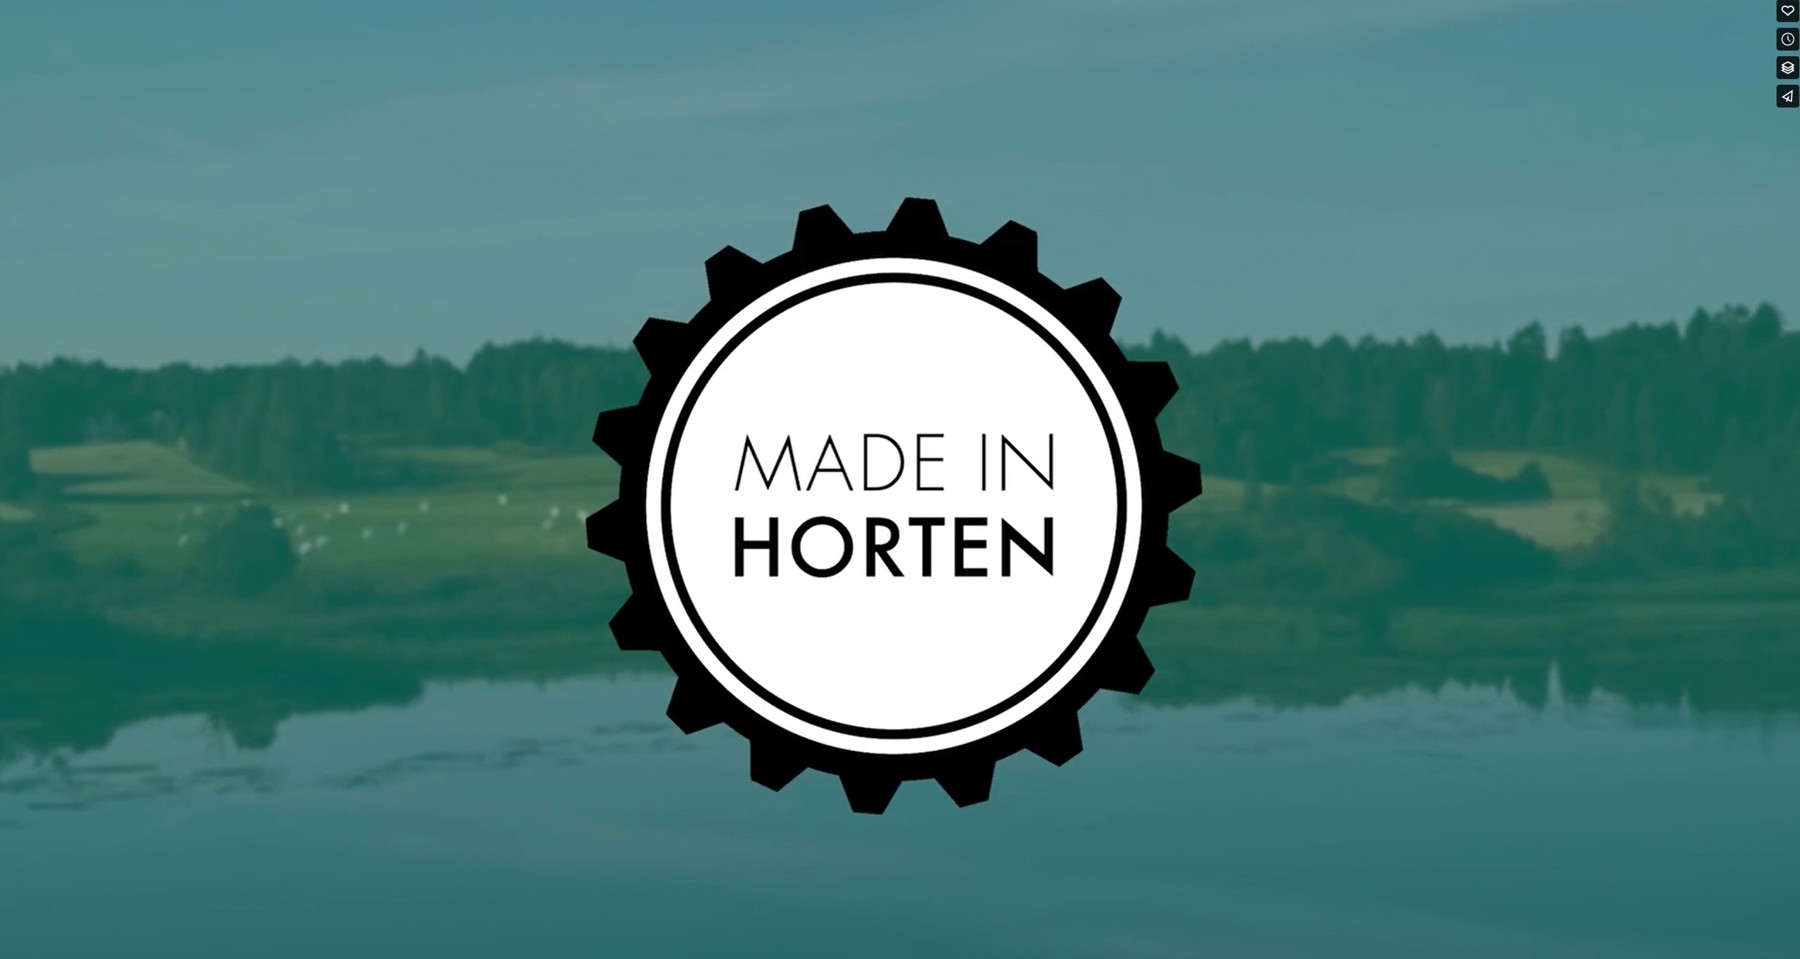 7Sense - Made In Horten